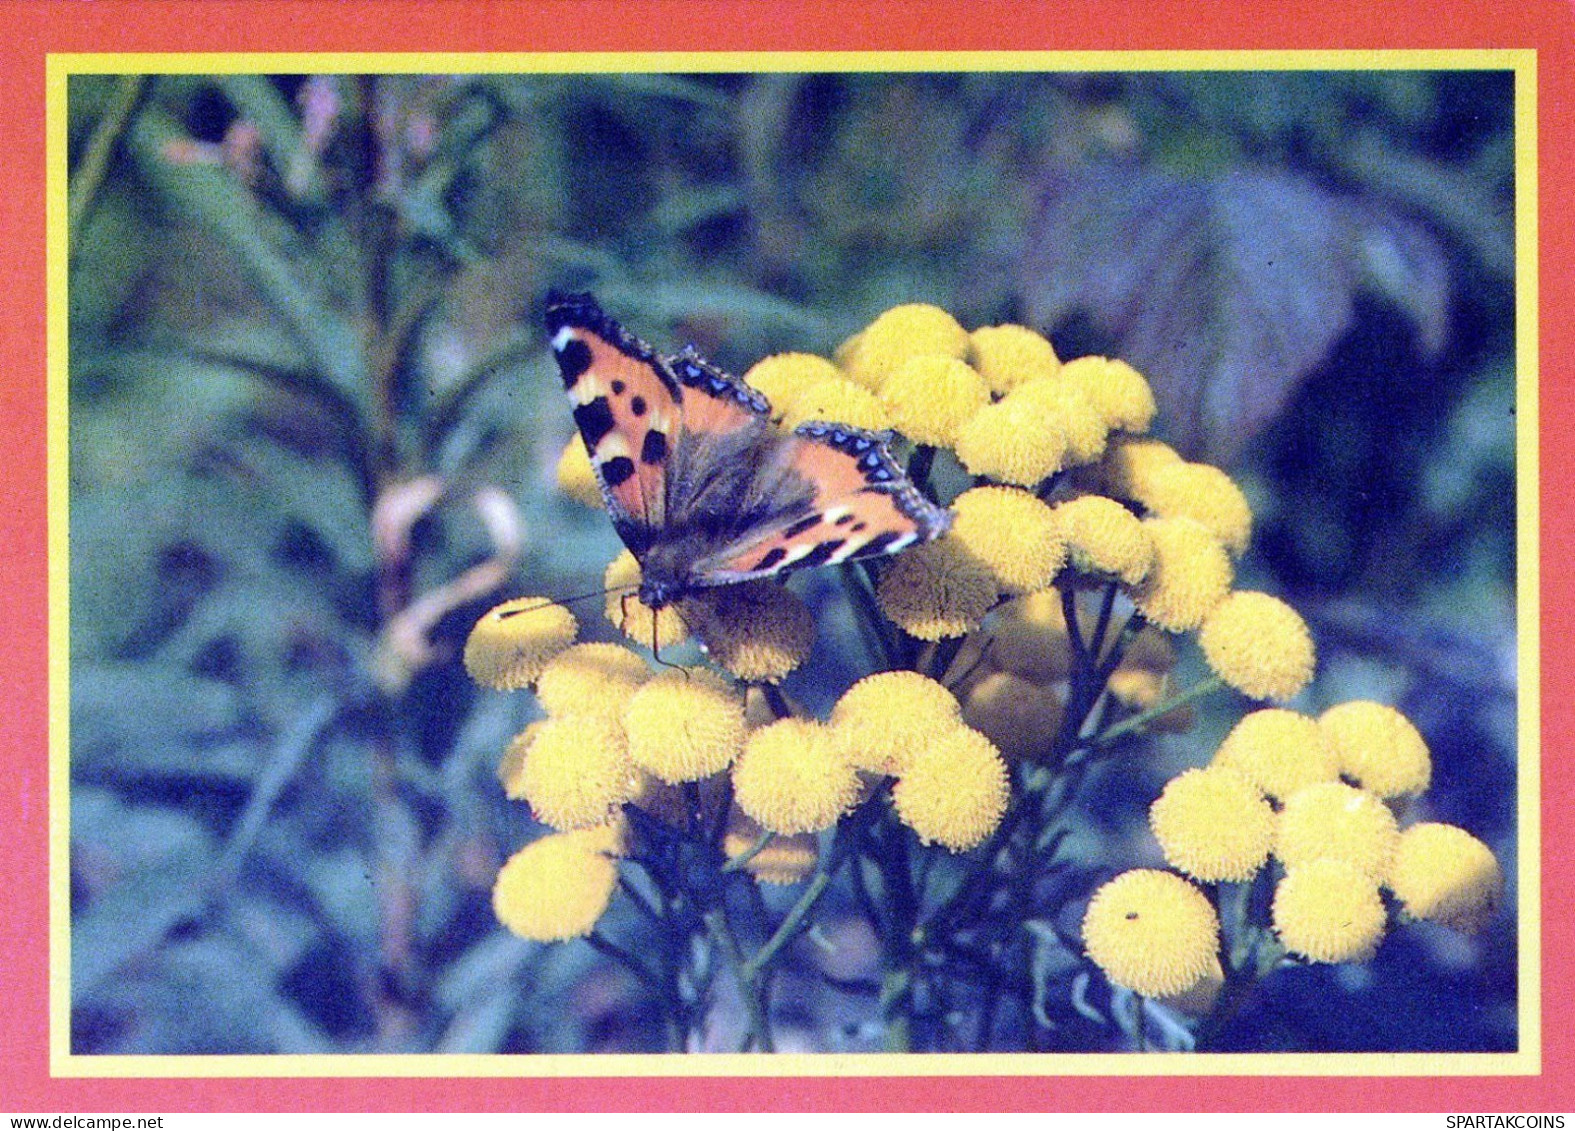 MARIPOSAS Animales Vintage Tarjeta Postal CPSM #PBS471.A - Butterflies